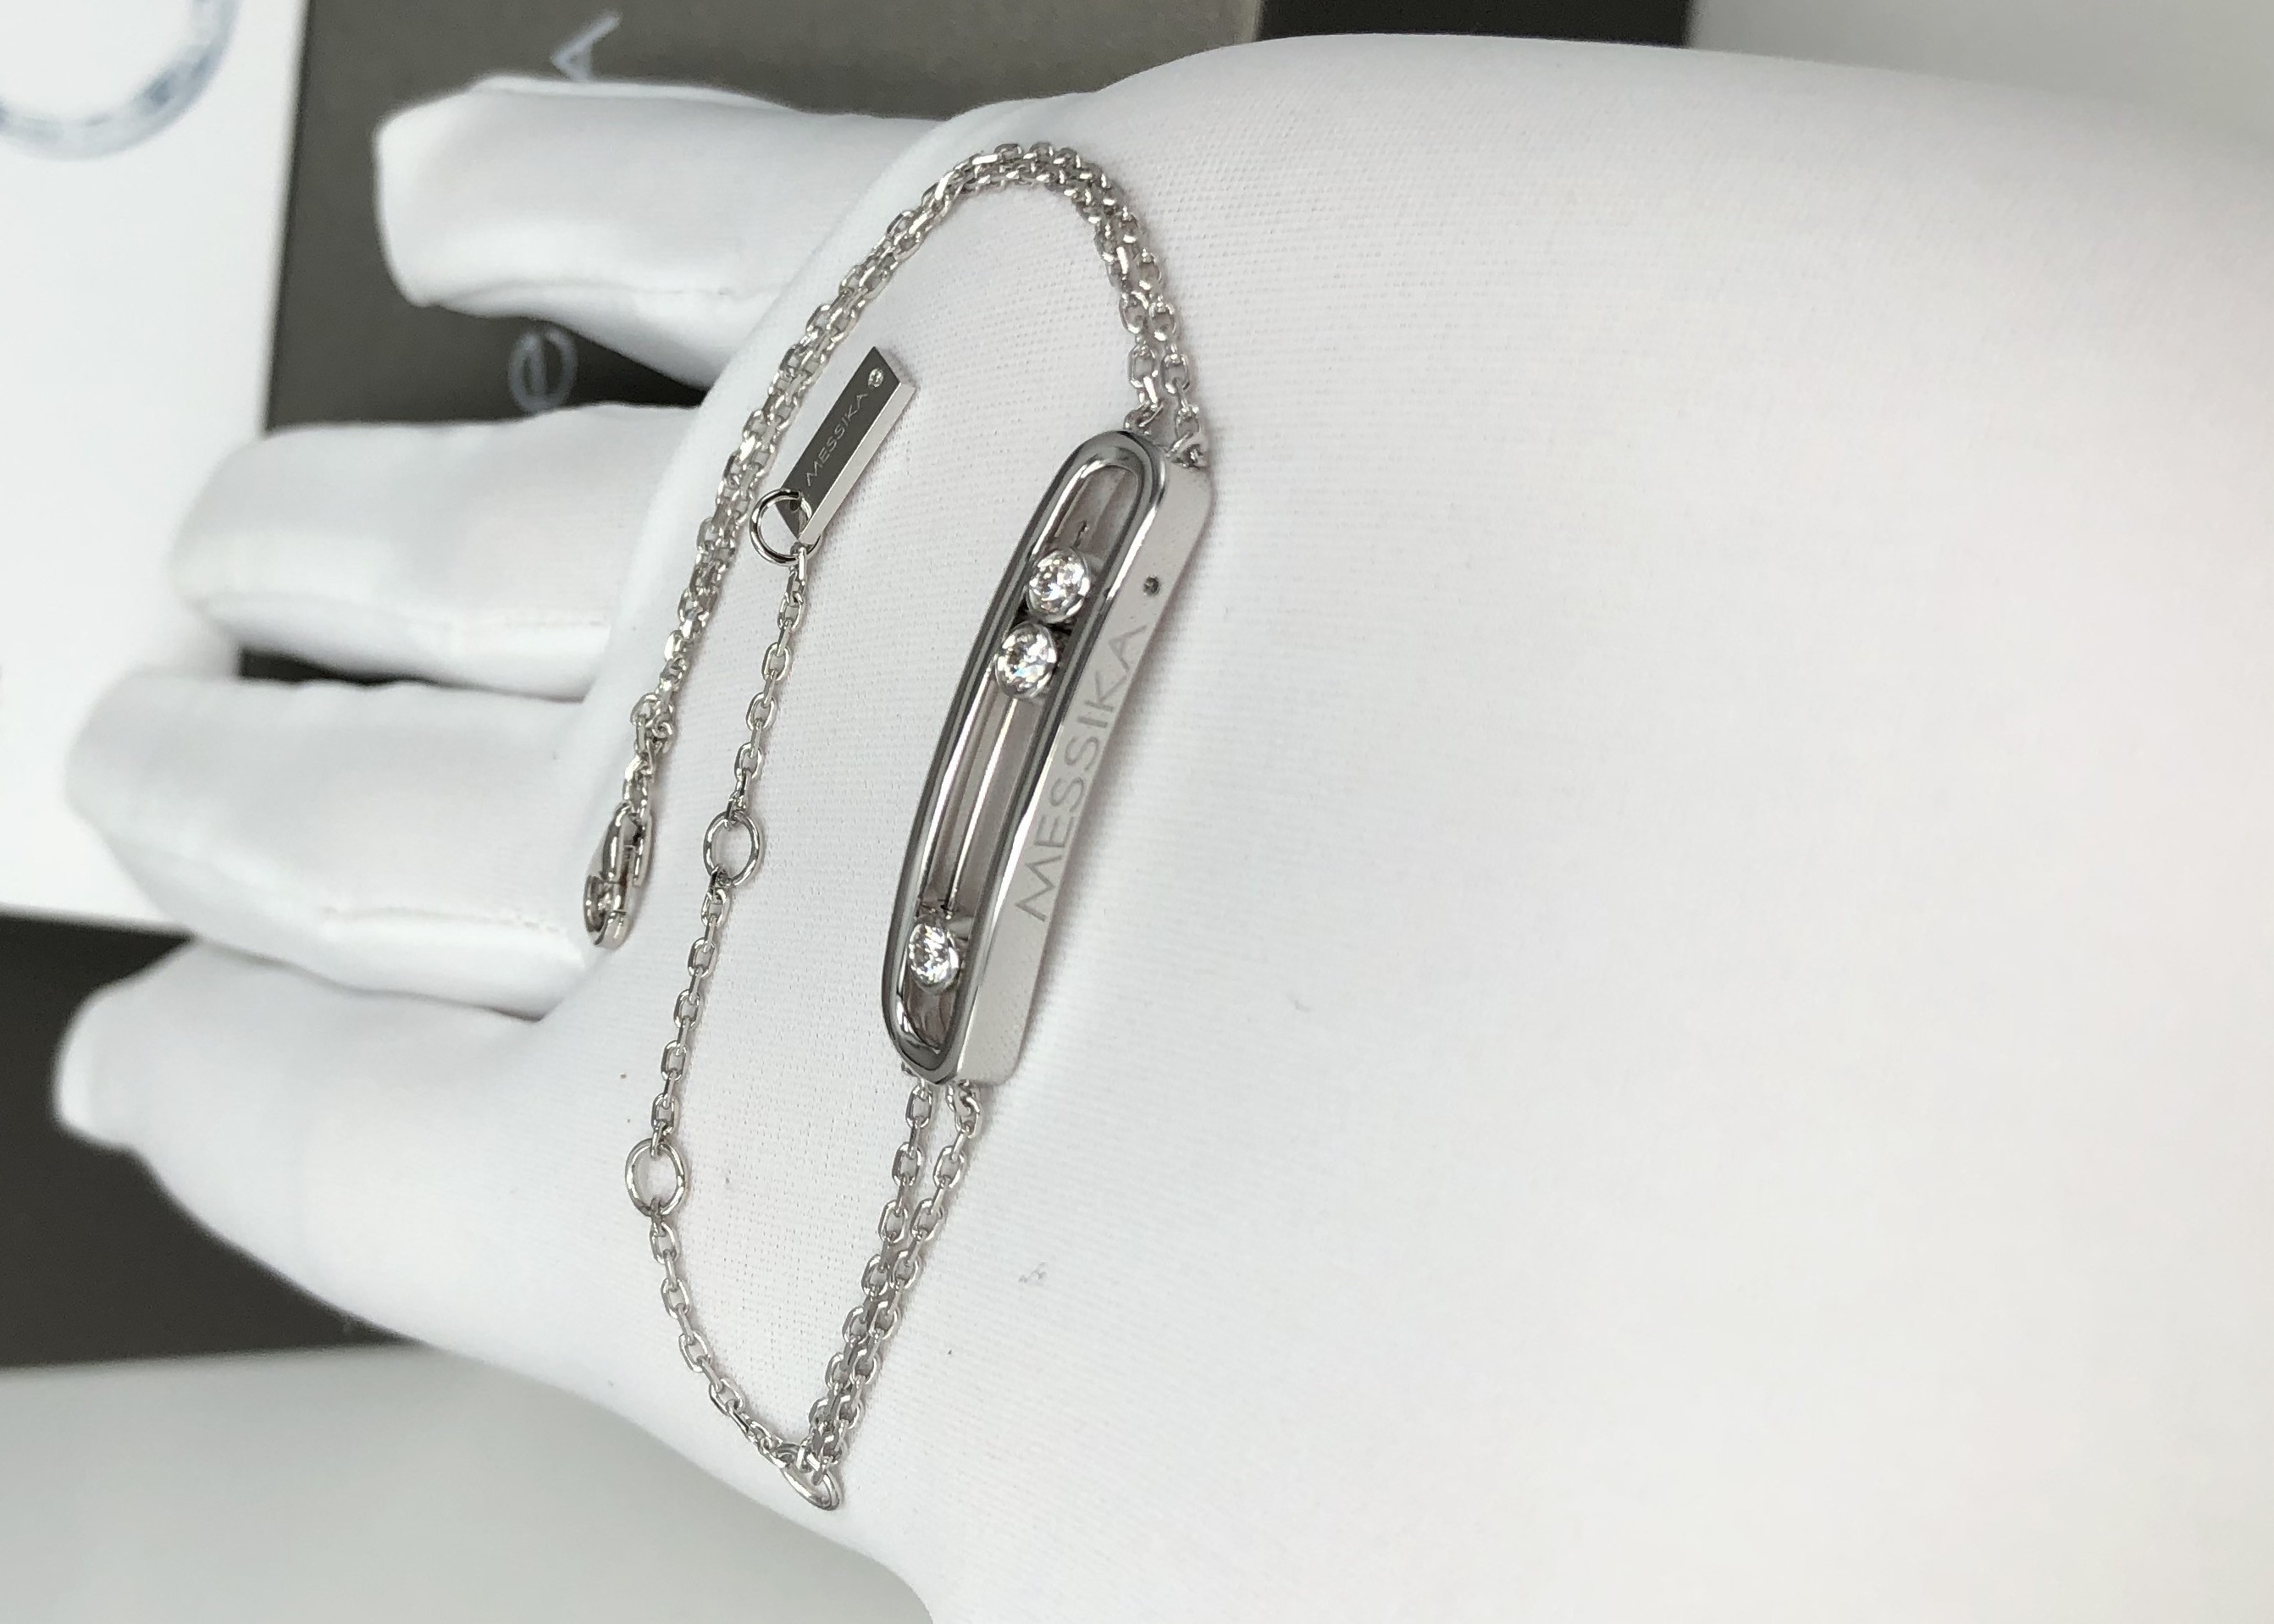  No Gemstone Messika Dual Chain 18k White Gold Diamond Bracelet Large Size Manufactures